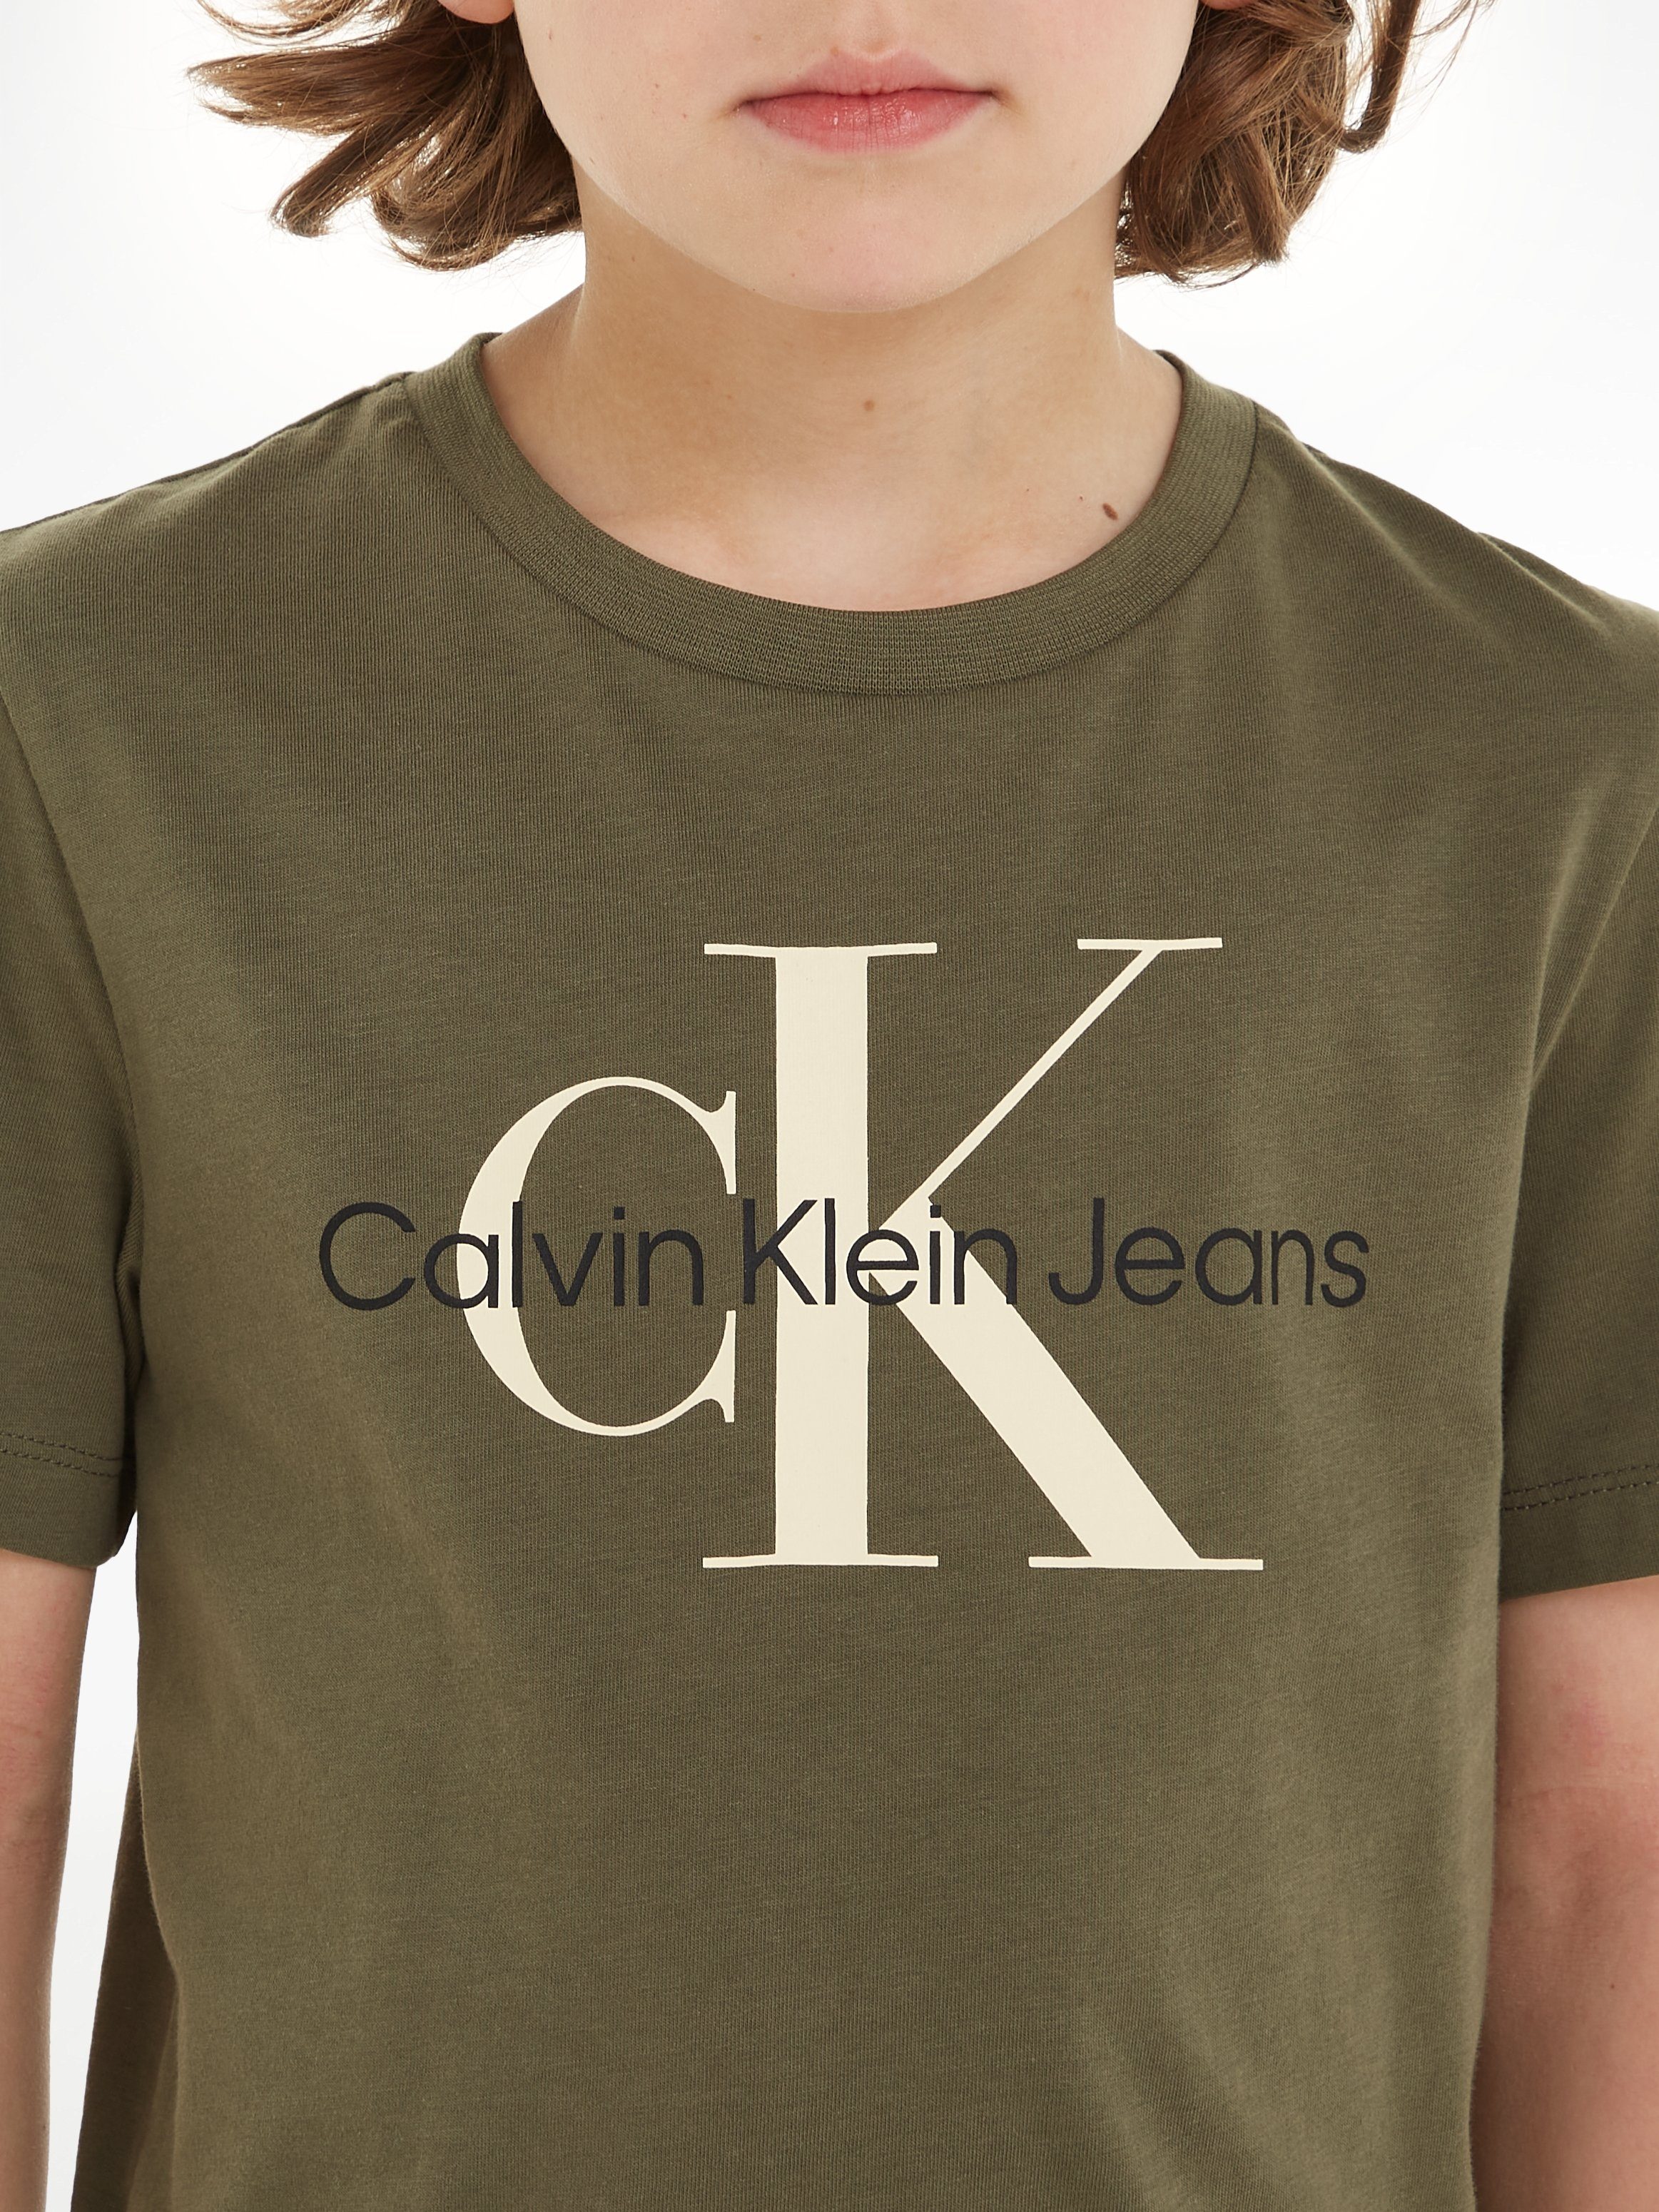 SS CK Calvin Dusty Olive Jeans T-SHIRT MONOGRAM Klein T-Shirt